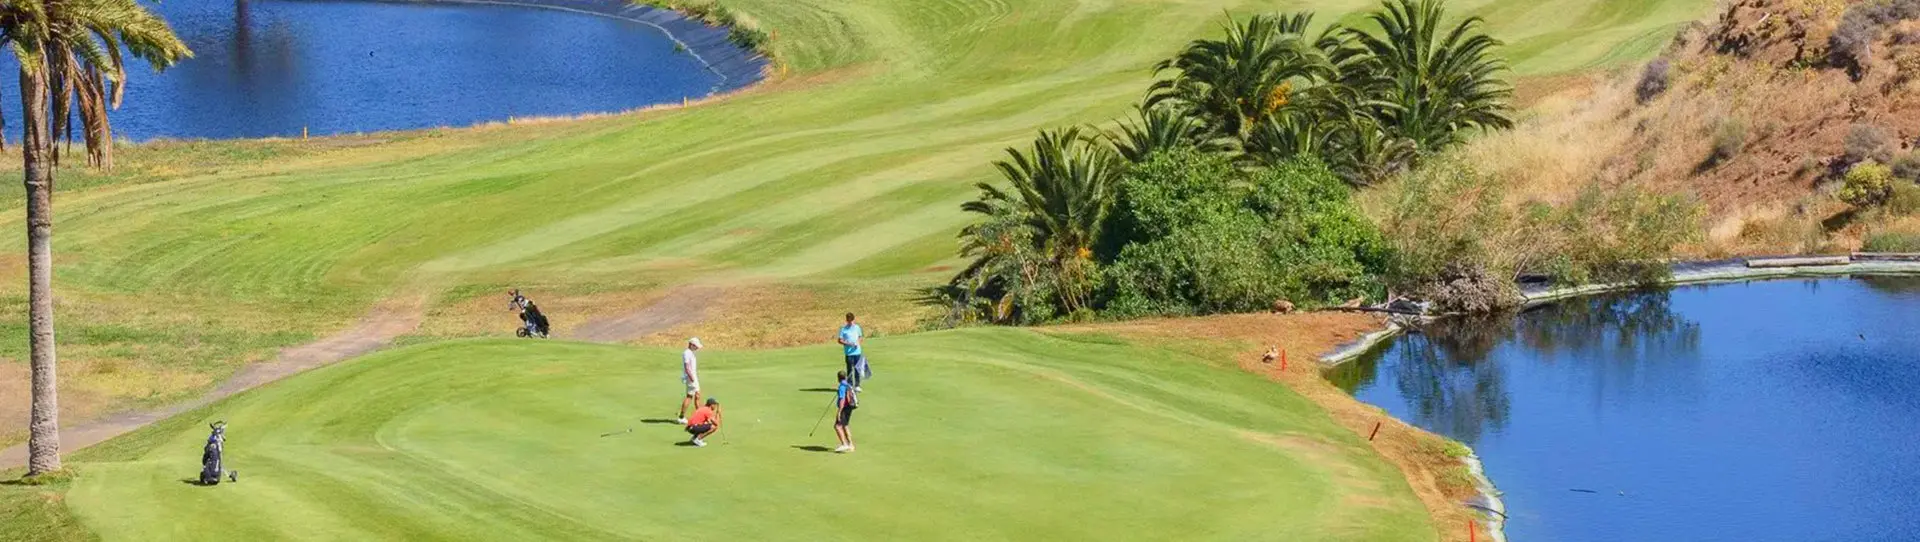 Spain golf holidays - El Cortijo 3 Days Unlimited Golf - Photo 3